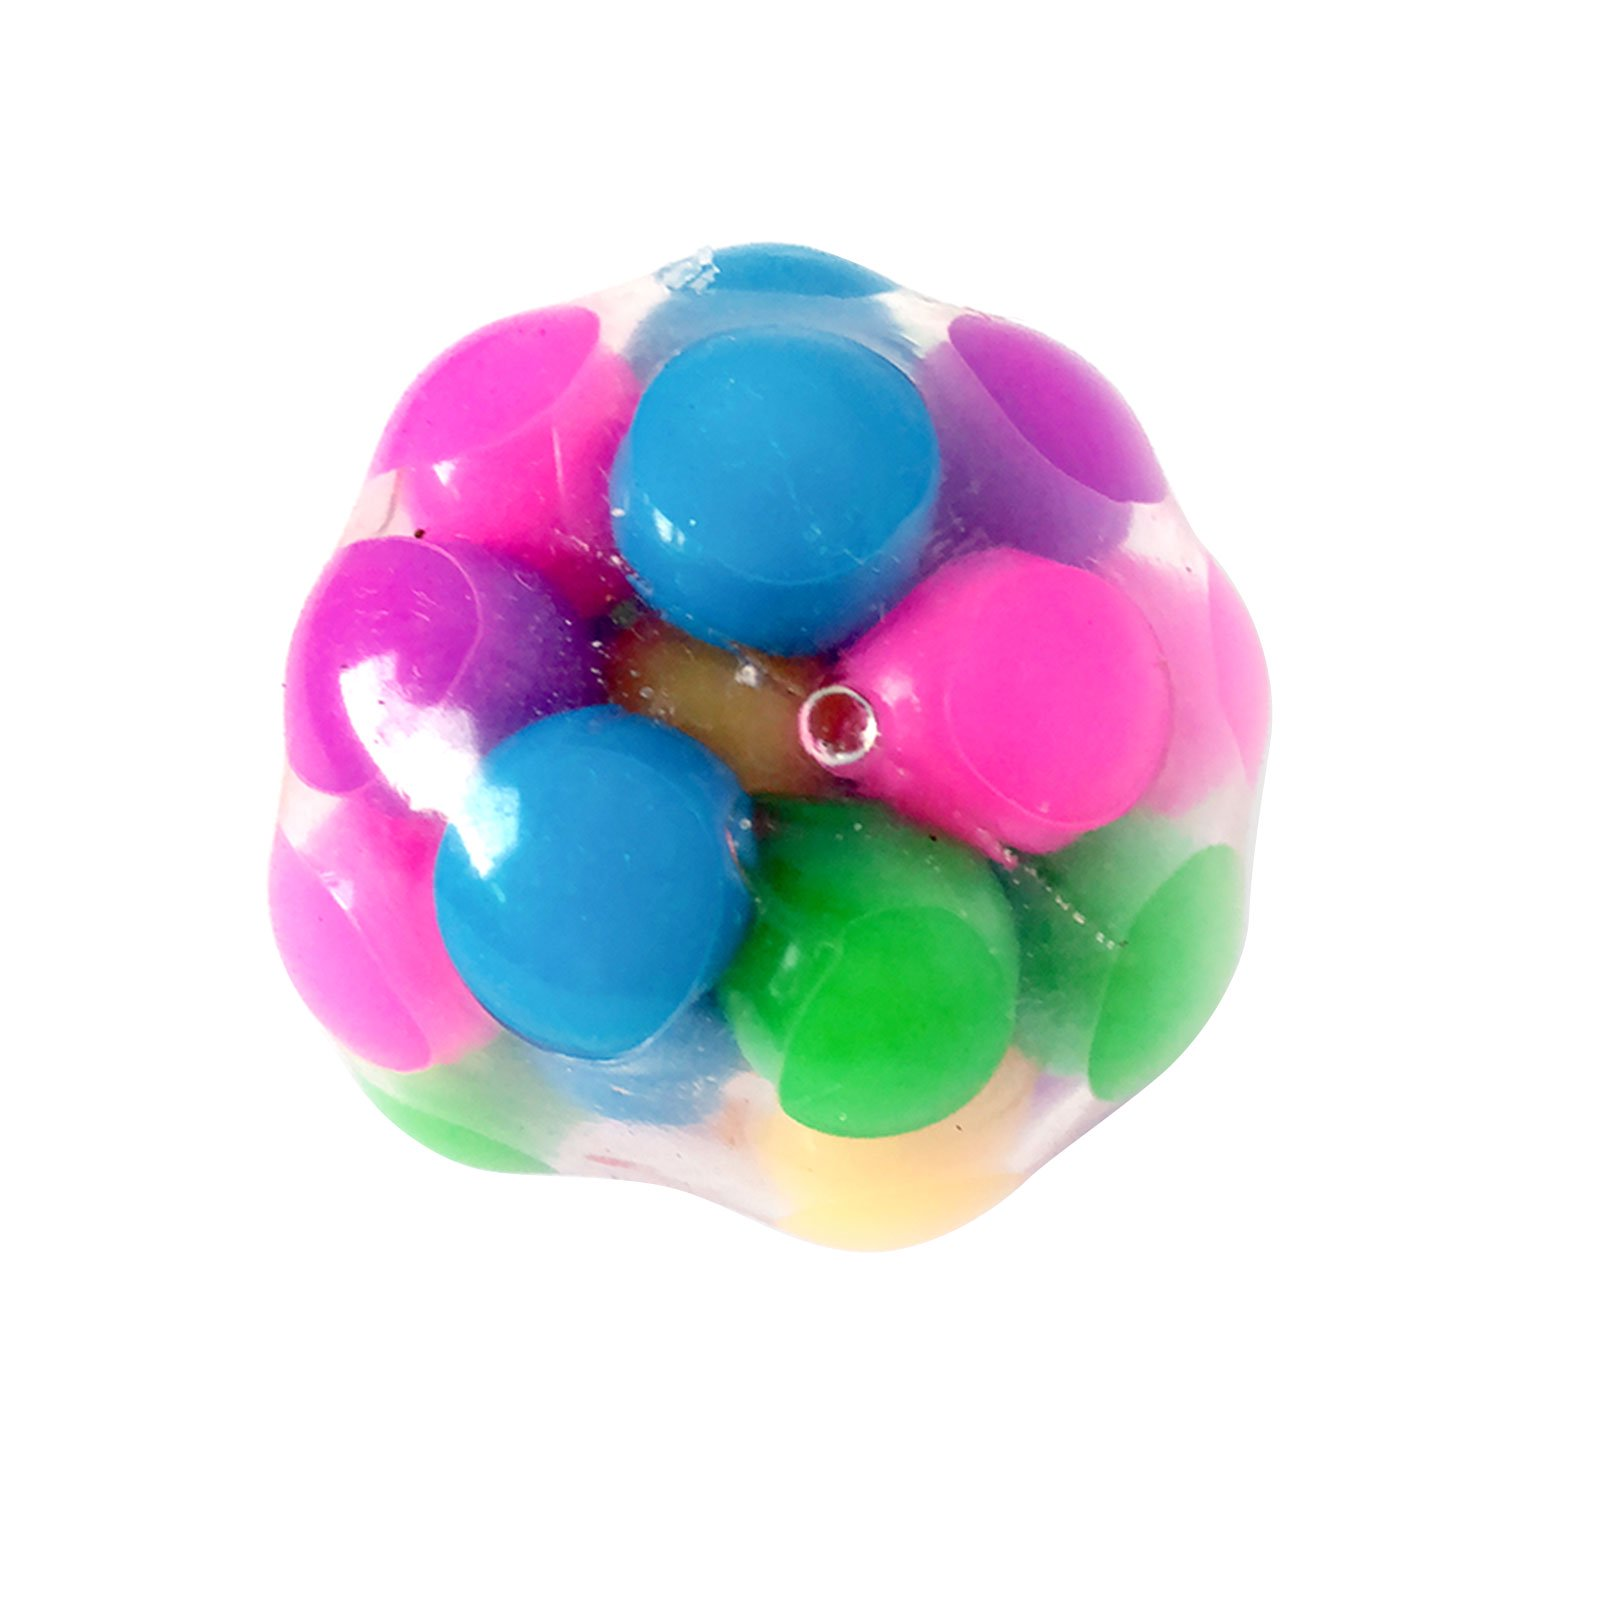 spier 3 Pcs/Set Stress Relief Balls Toys Stress Relief DNA Sensory Balls Toy 